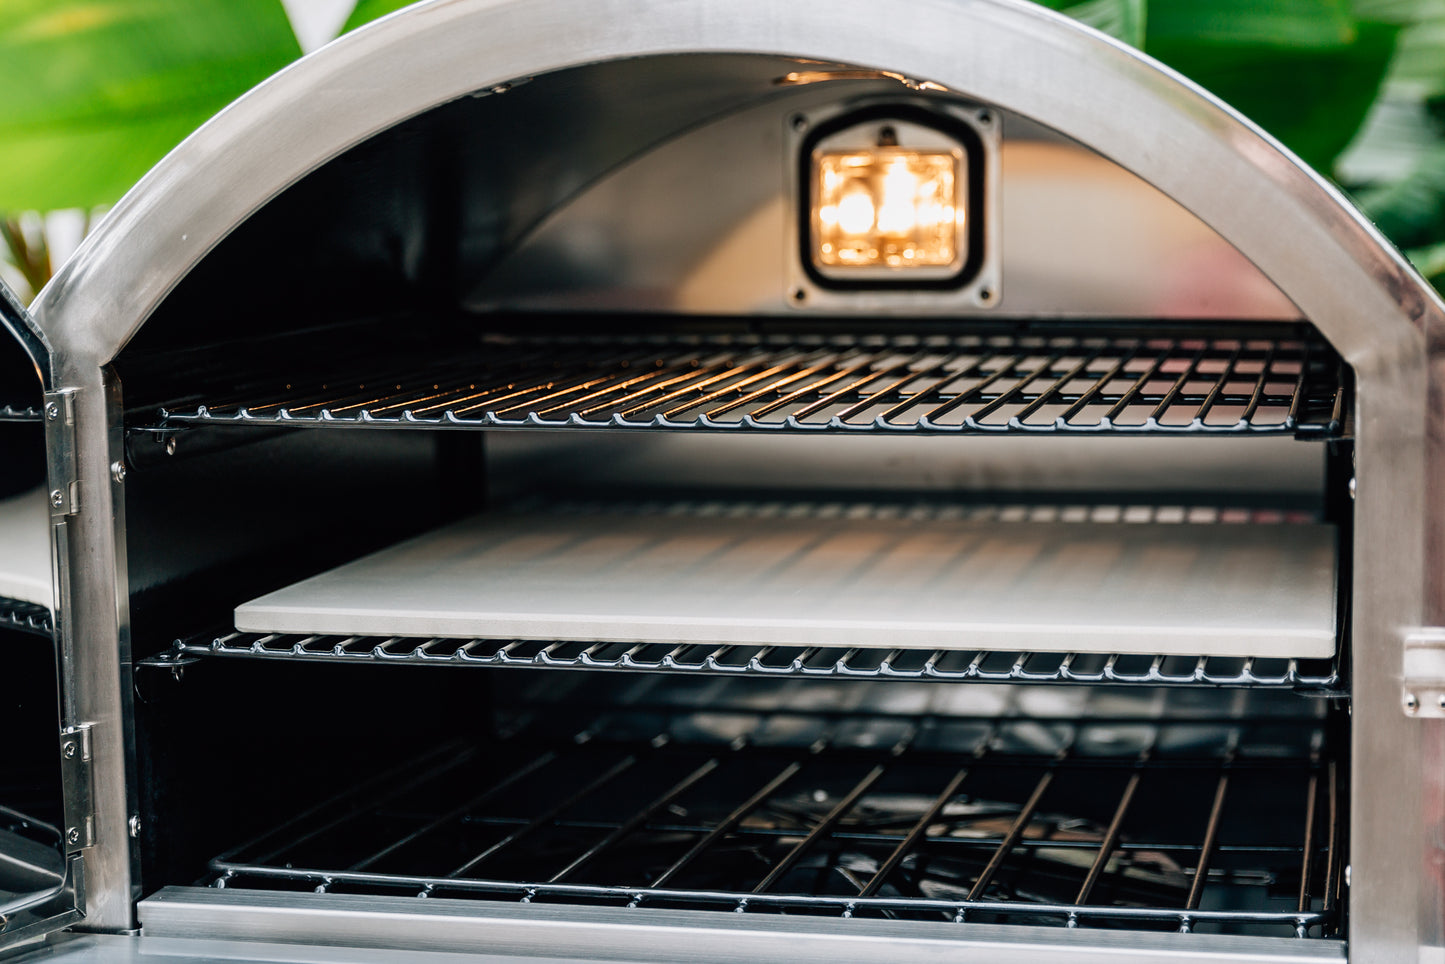 Summerset Countertop / Built In Pizza Oven - Natural Gas